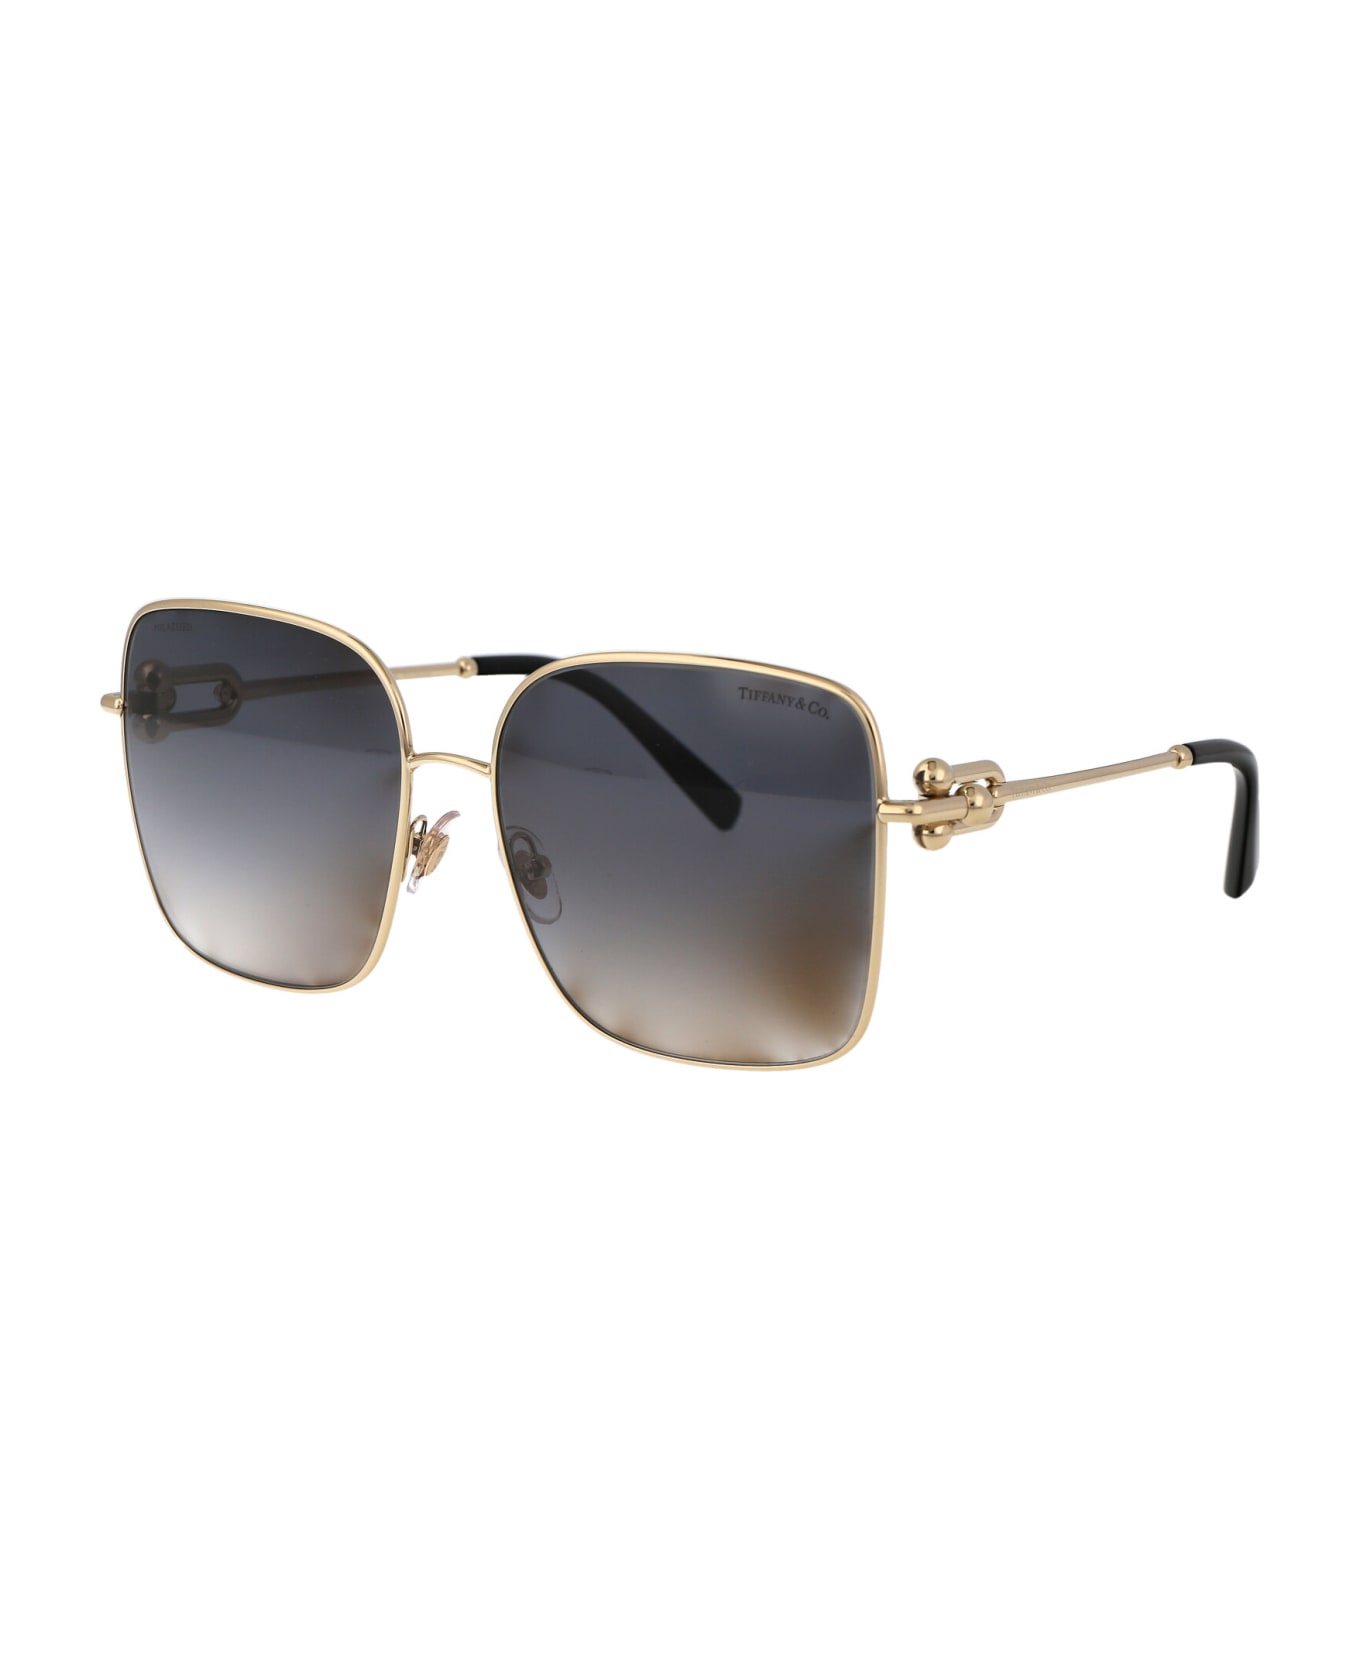 Tiffany & Co. 0tf3094 Sunglasses - 6198T3 Pale Gold